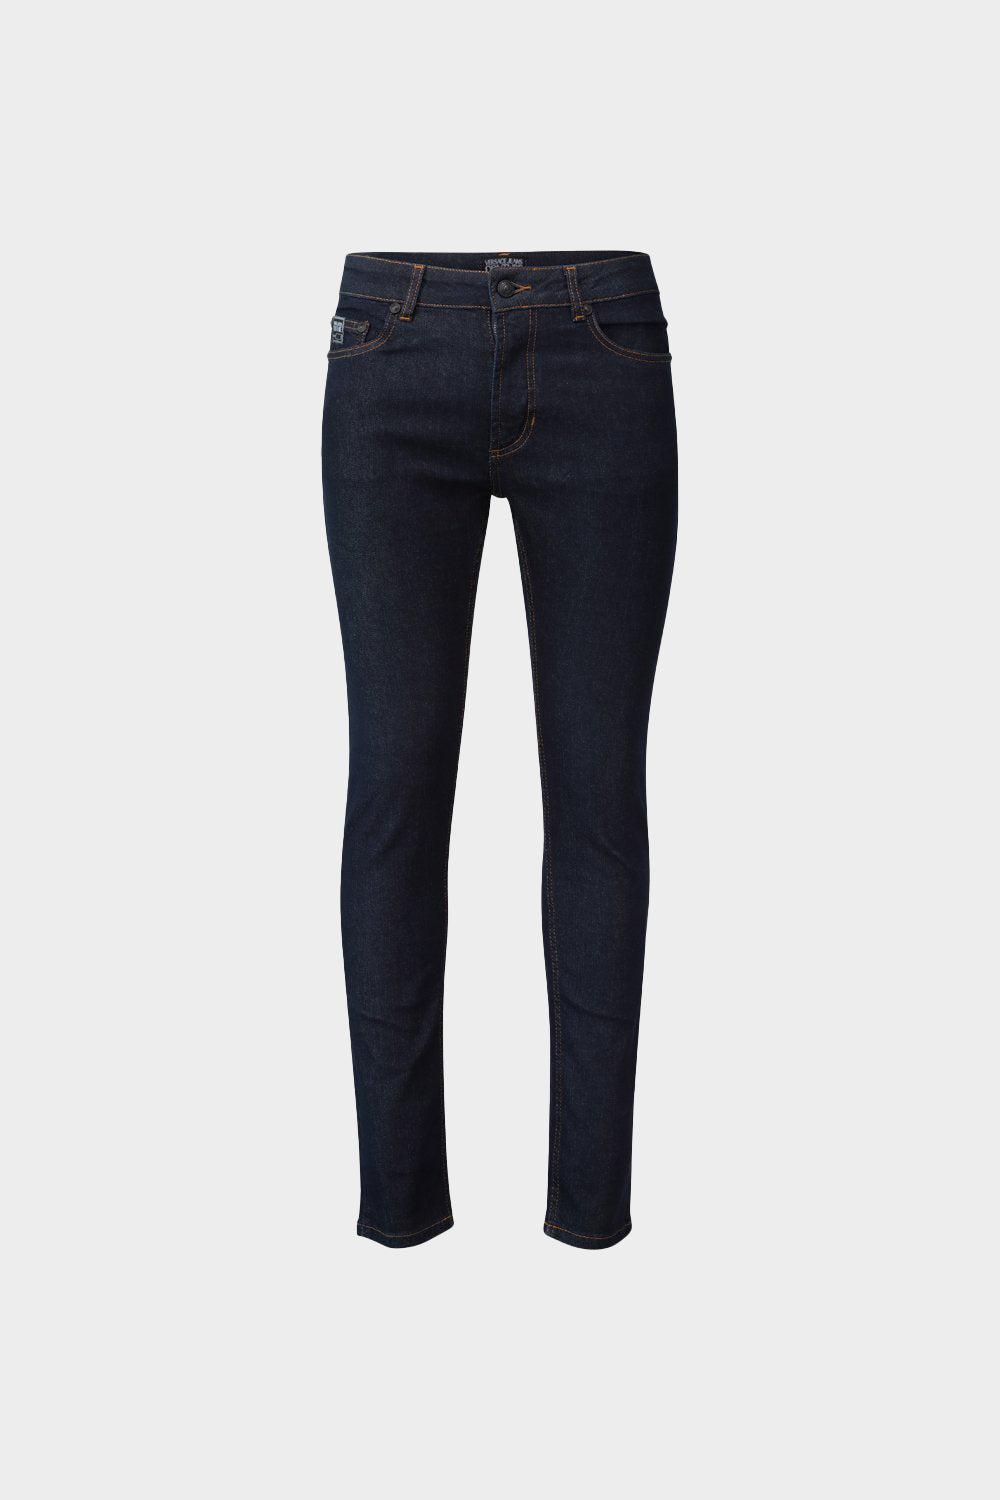 מכנסי ג'ינס לגברים גזרה צרה VERSACE Vendome online | ונדום .